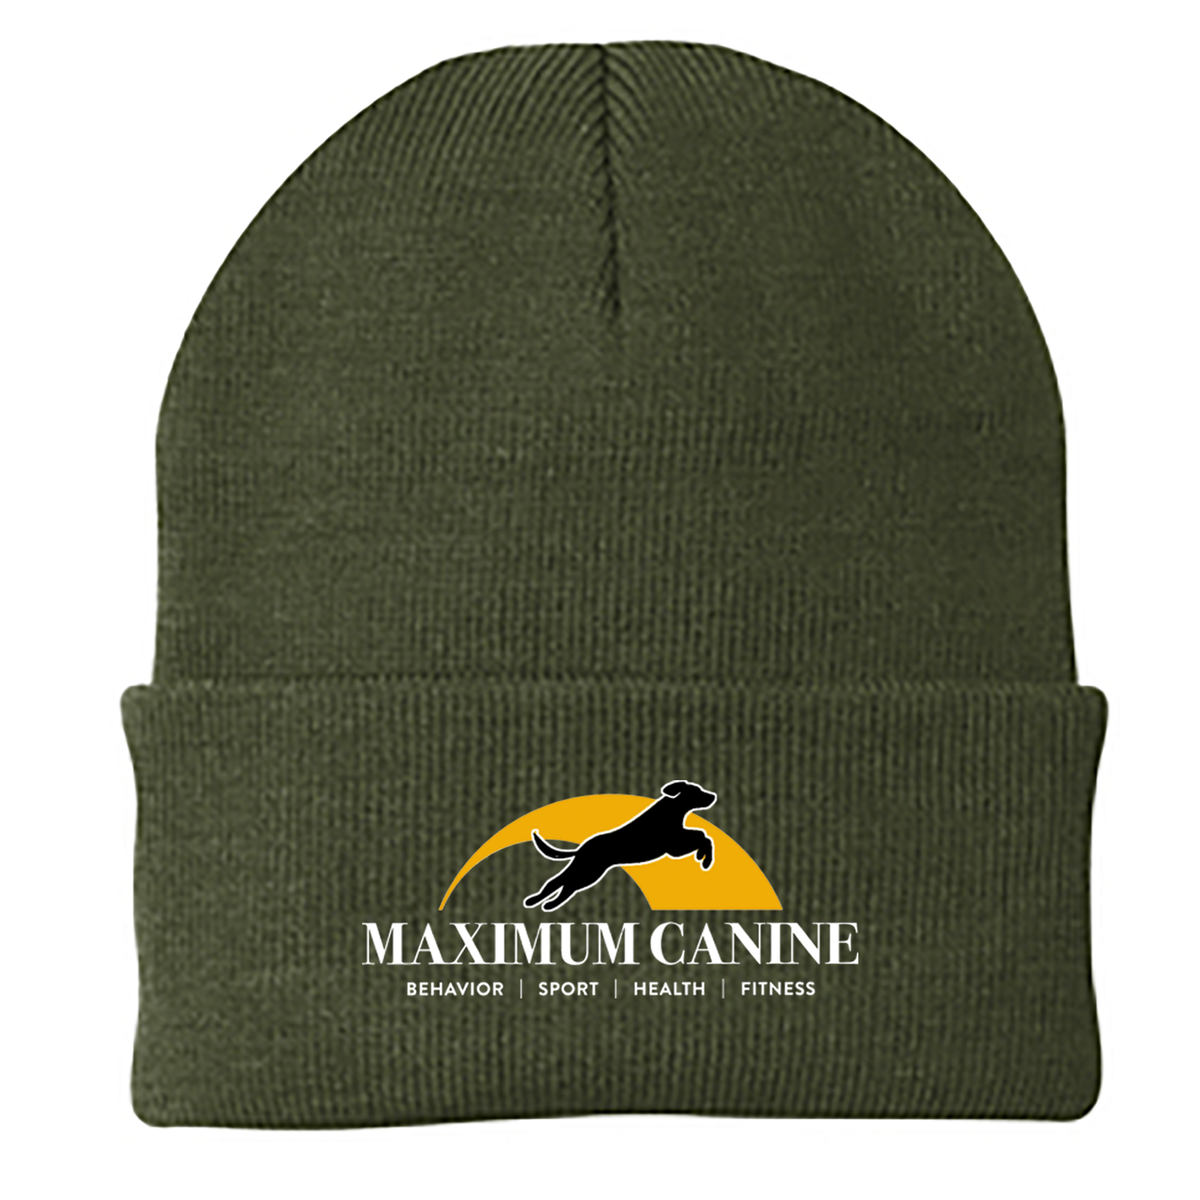 Maximum Canine Knit Beanie